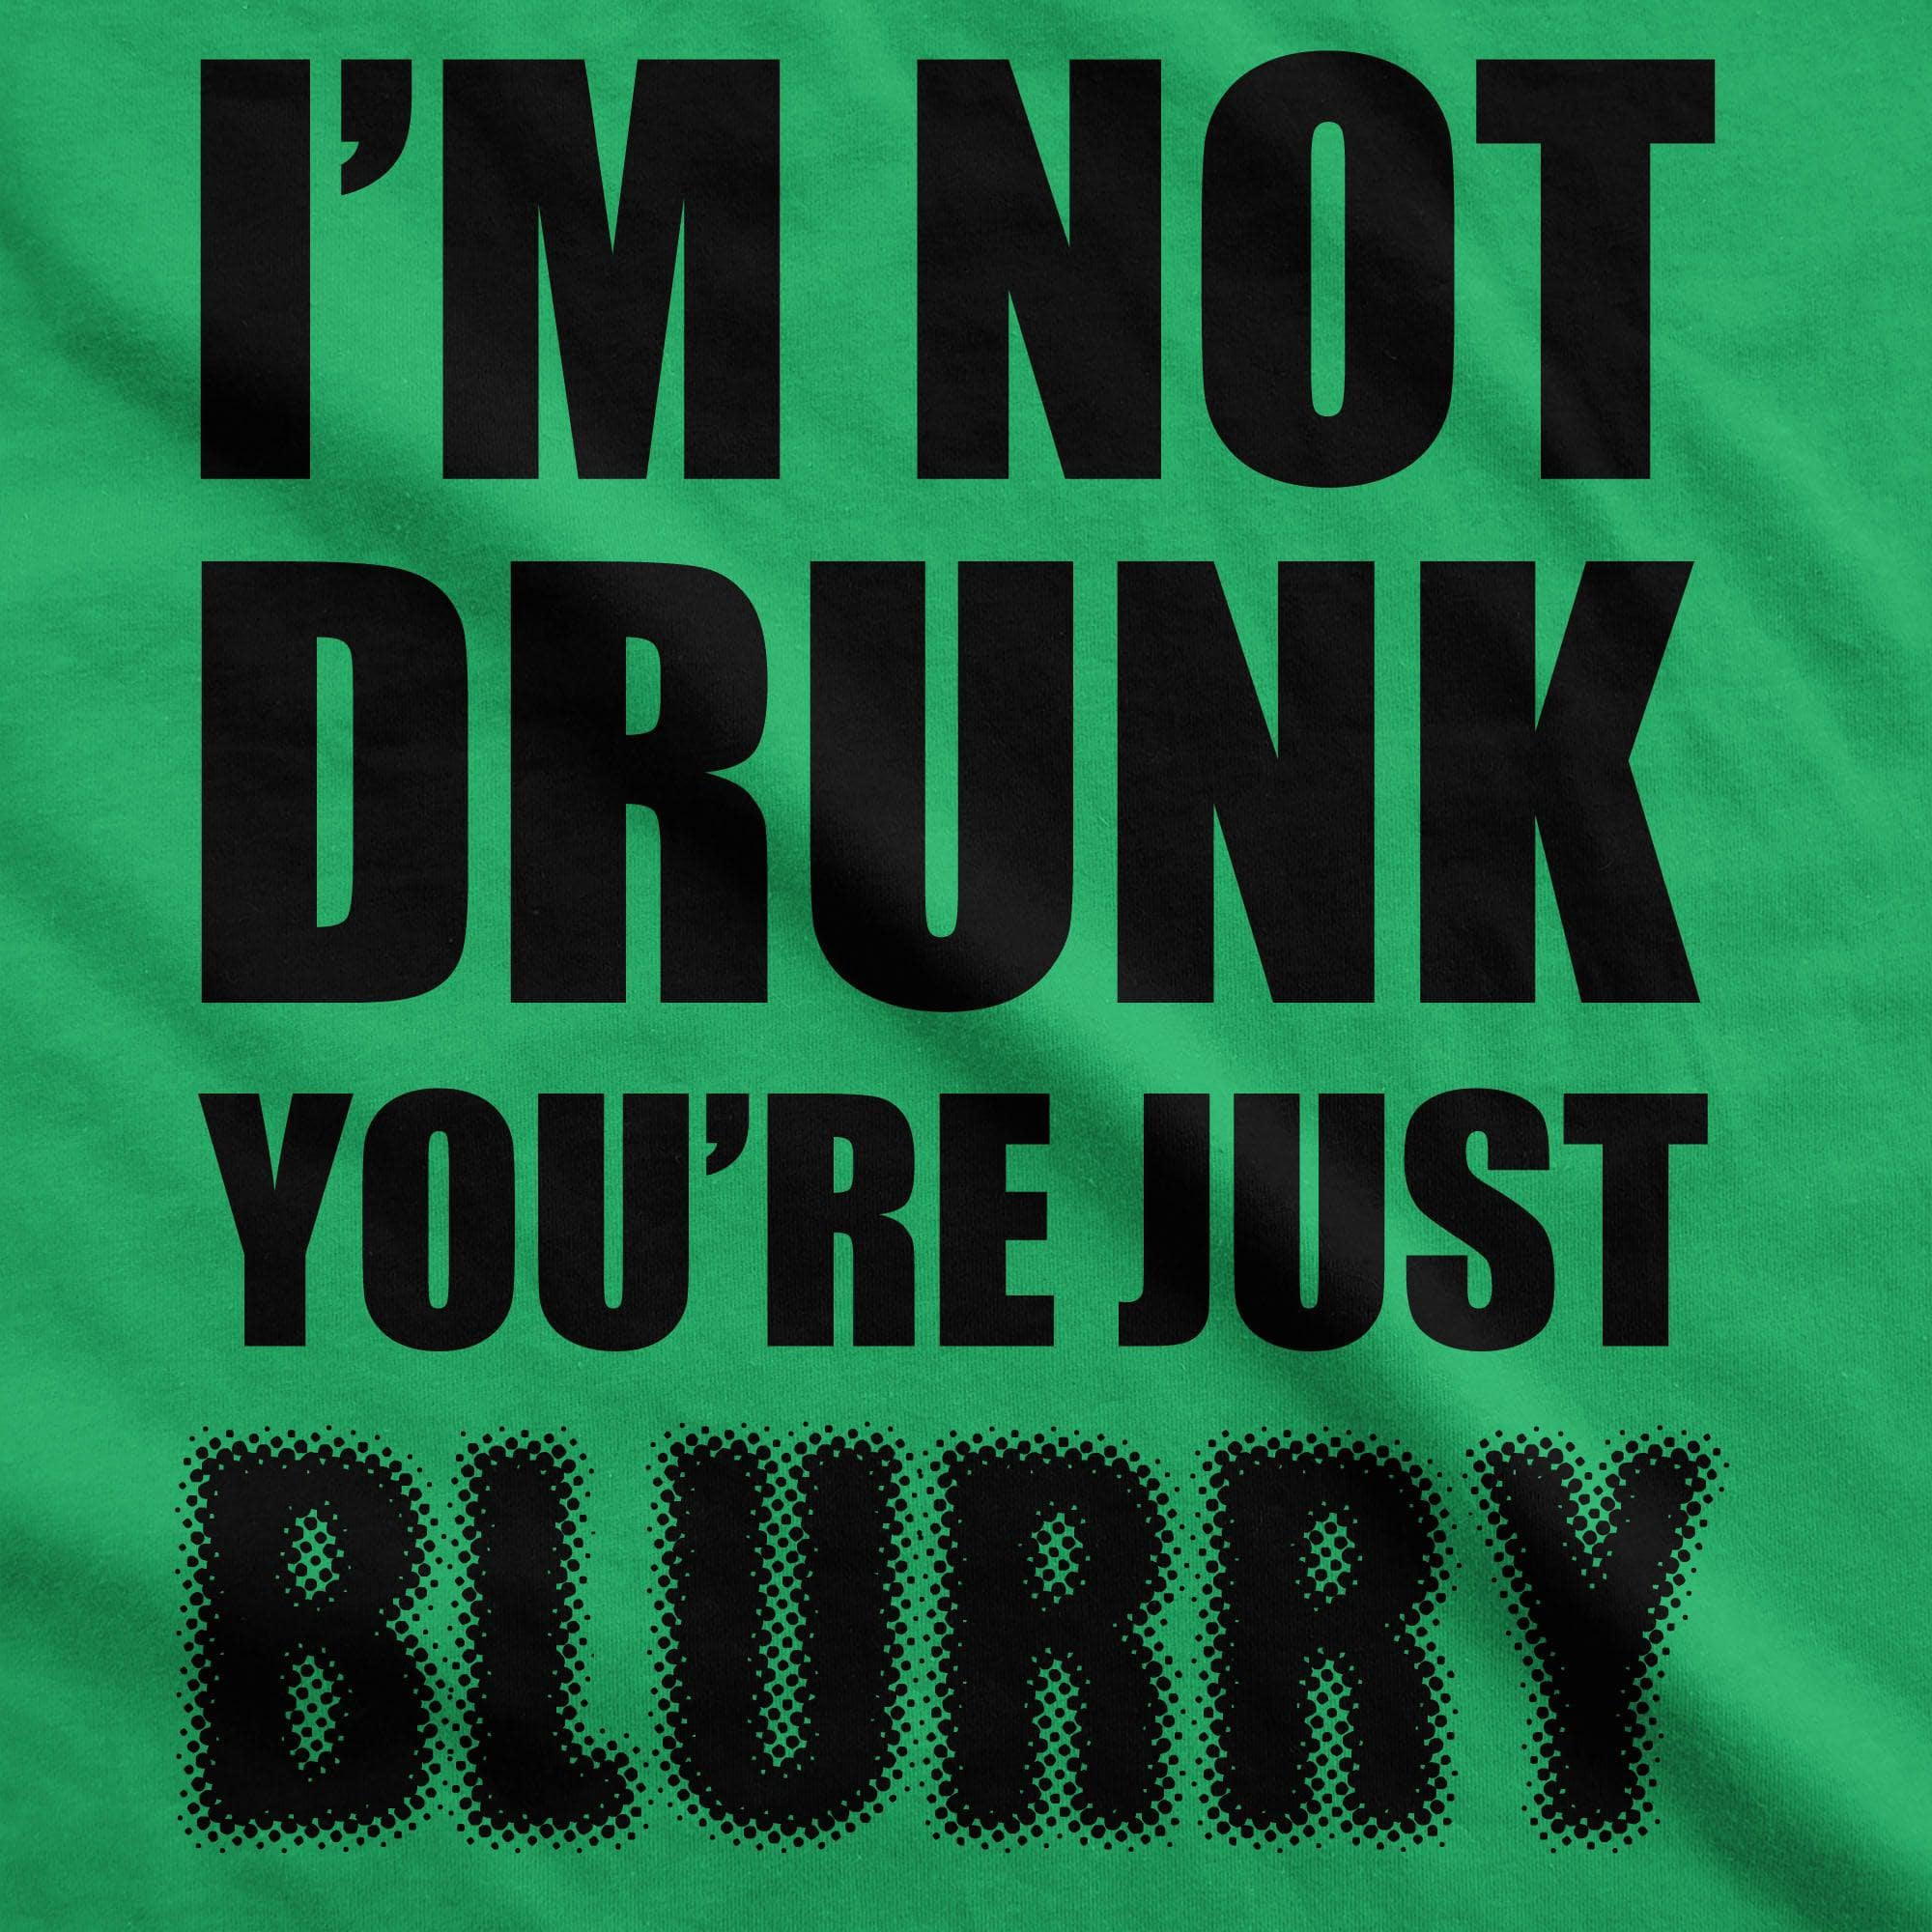 I'm Not Drunk You're Just Blurry Men's Tshirt  -  Crazy Dog T-Shirts